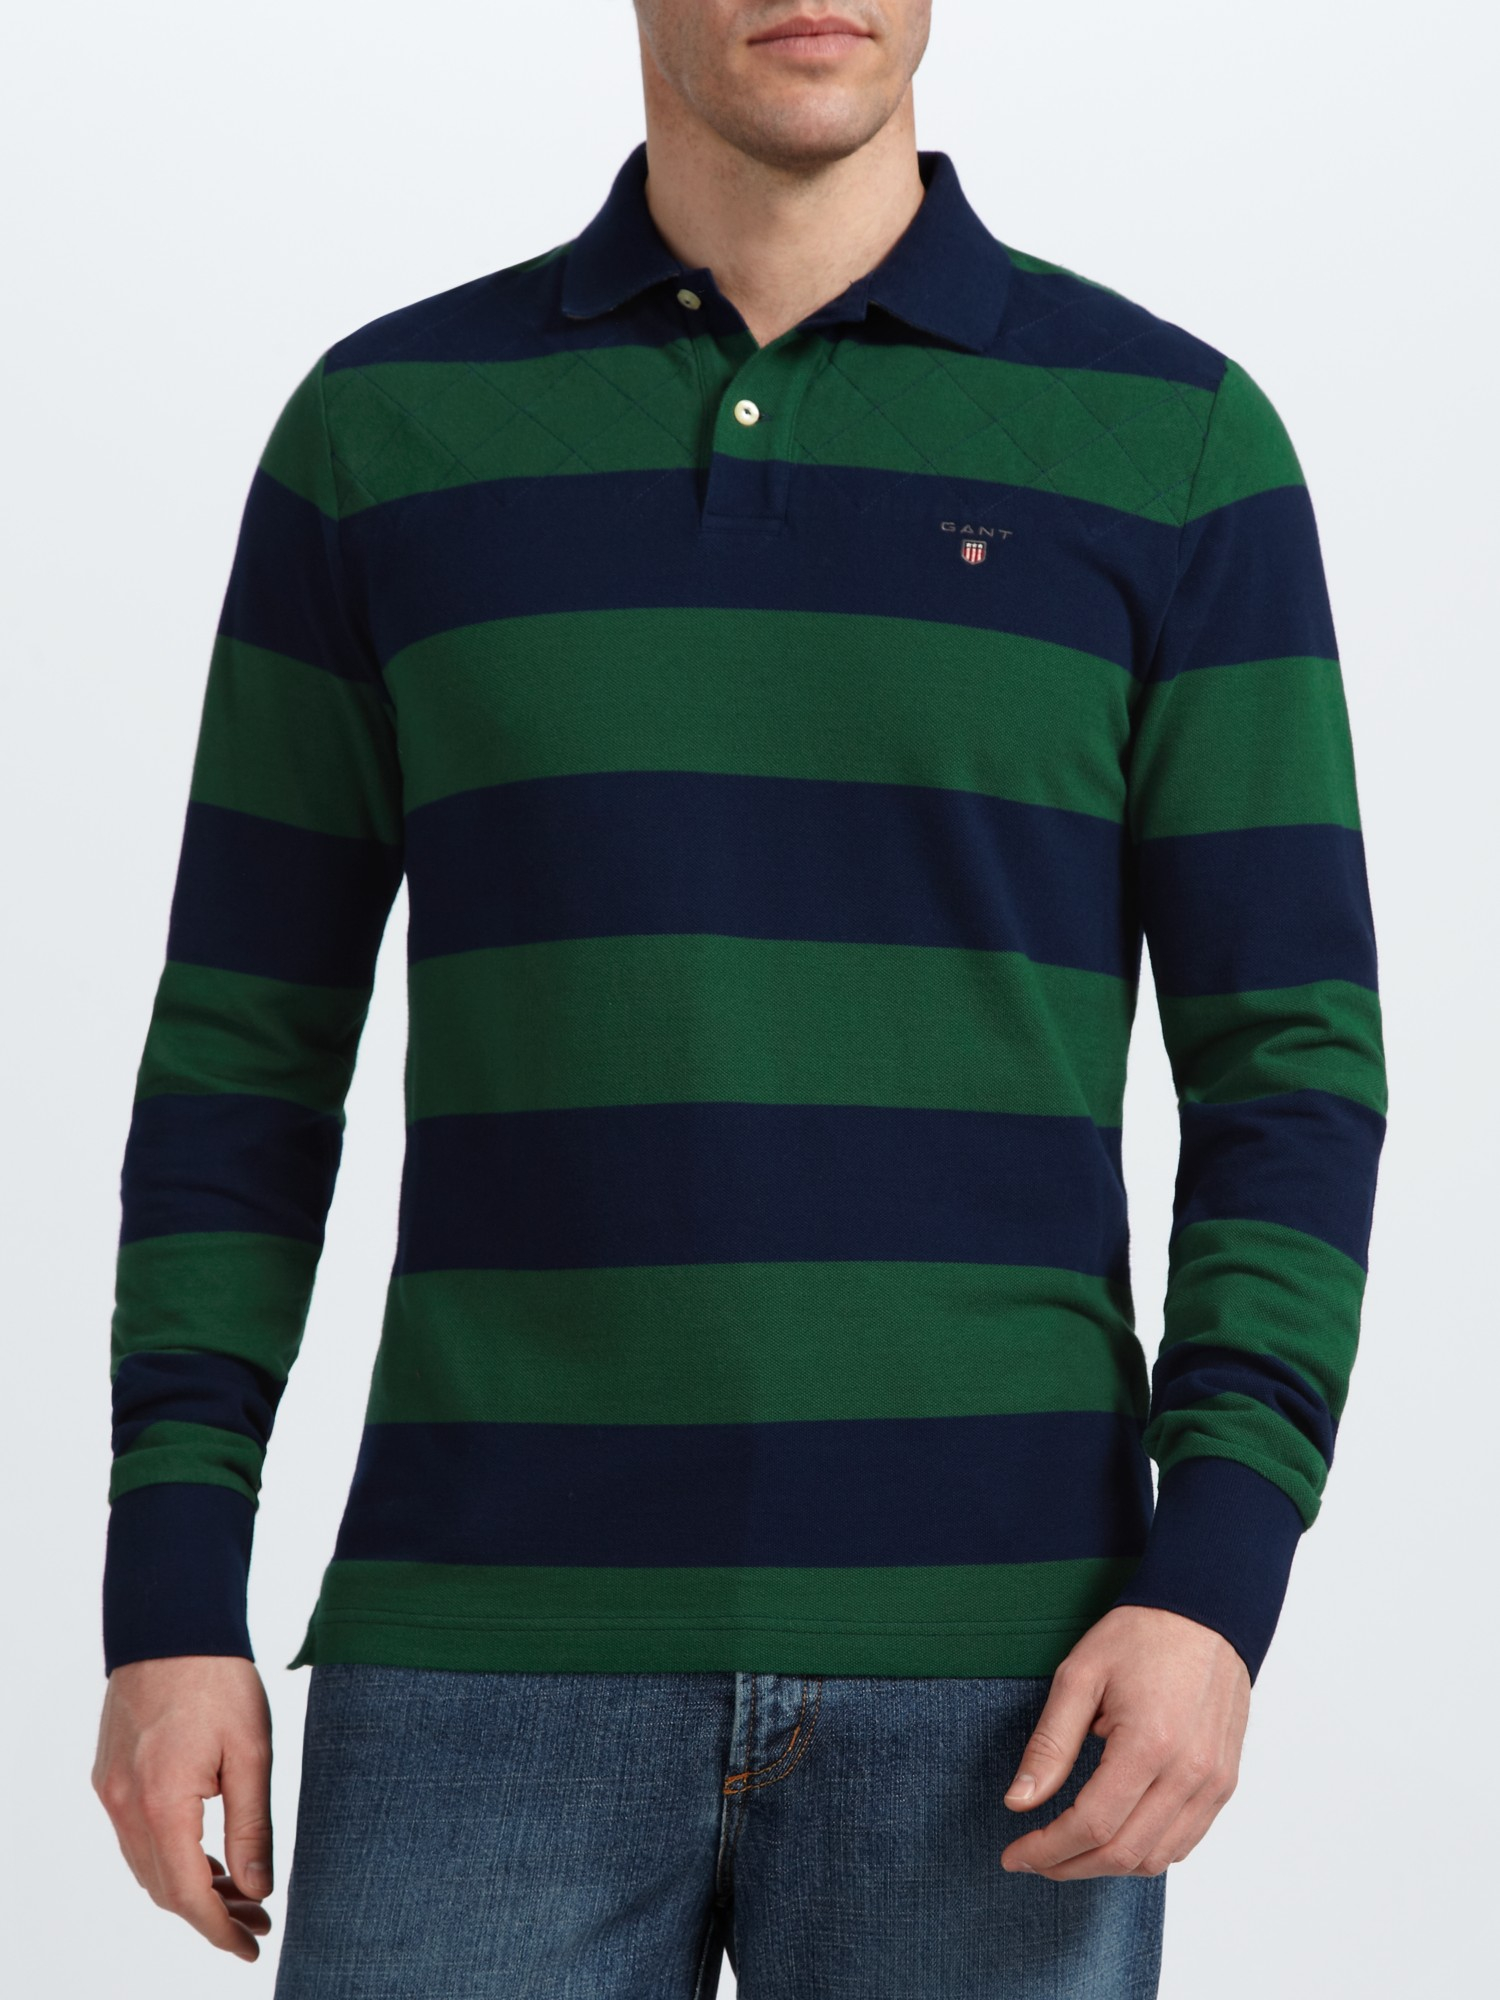 GANT Cotton Barstripe Rugby Shirt in Green (Blue) for Men - Lyst